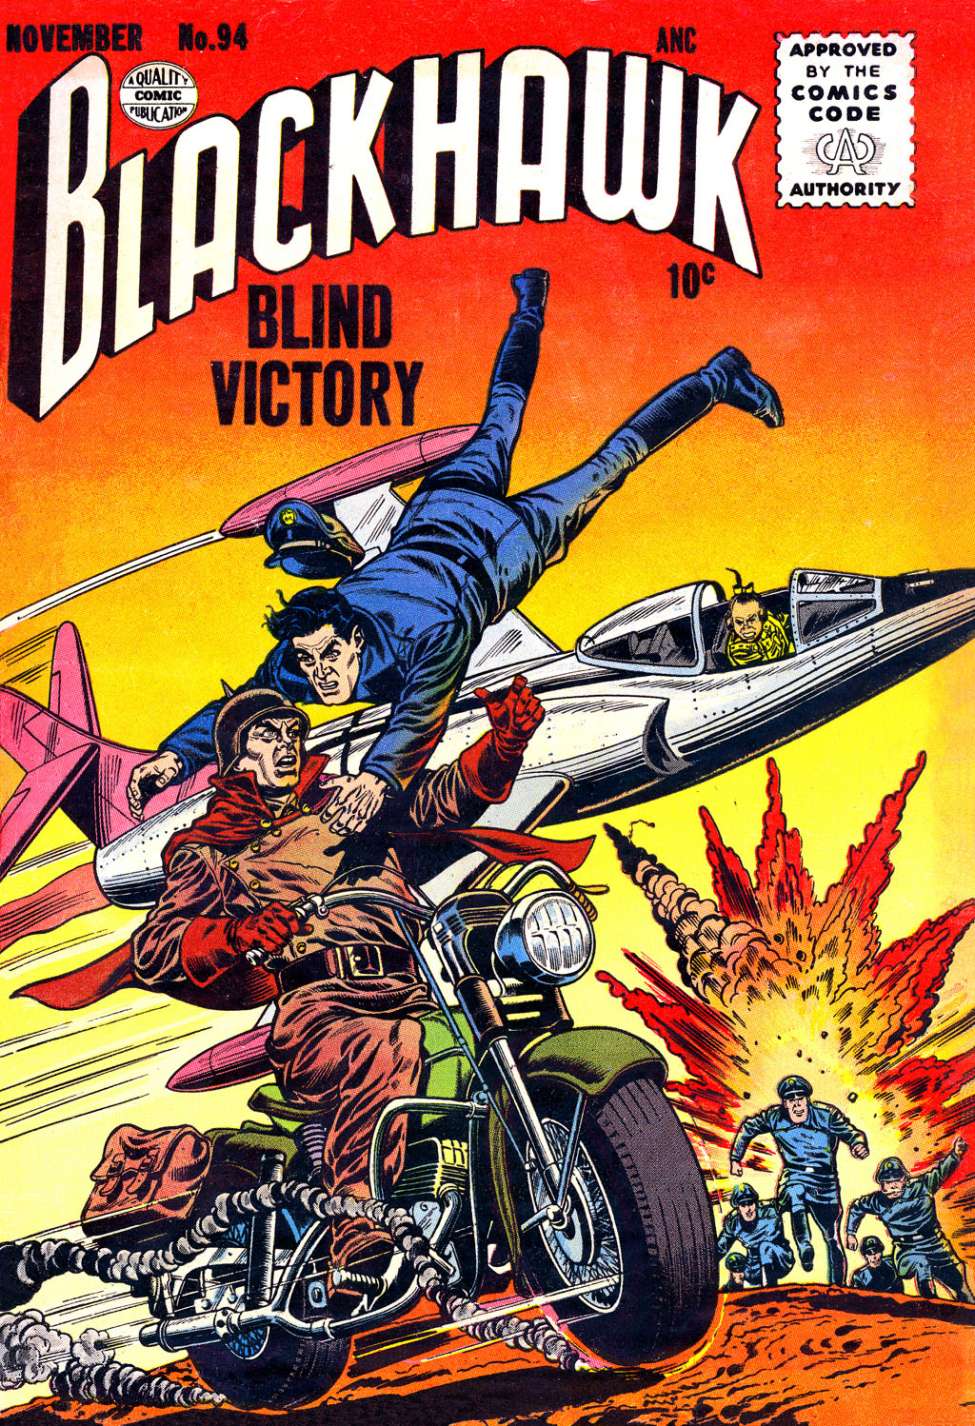 Comic Book Cover For Blackhawk 94 - Version 1